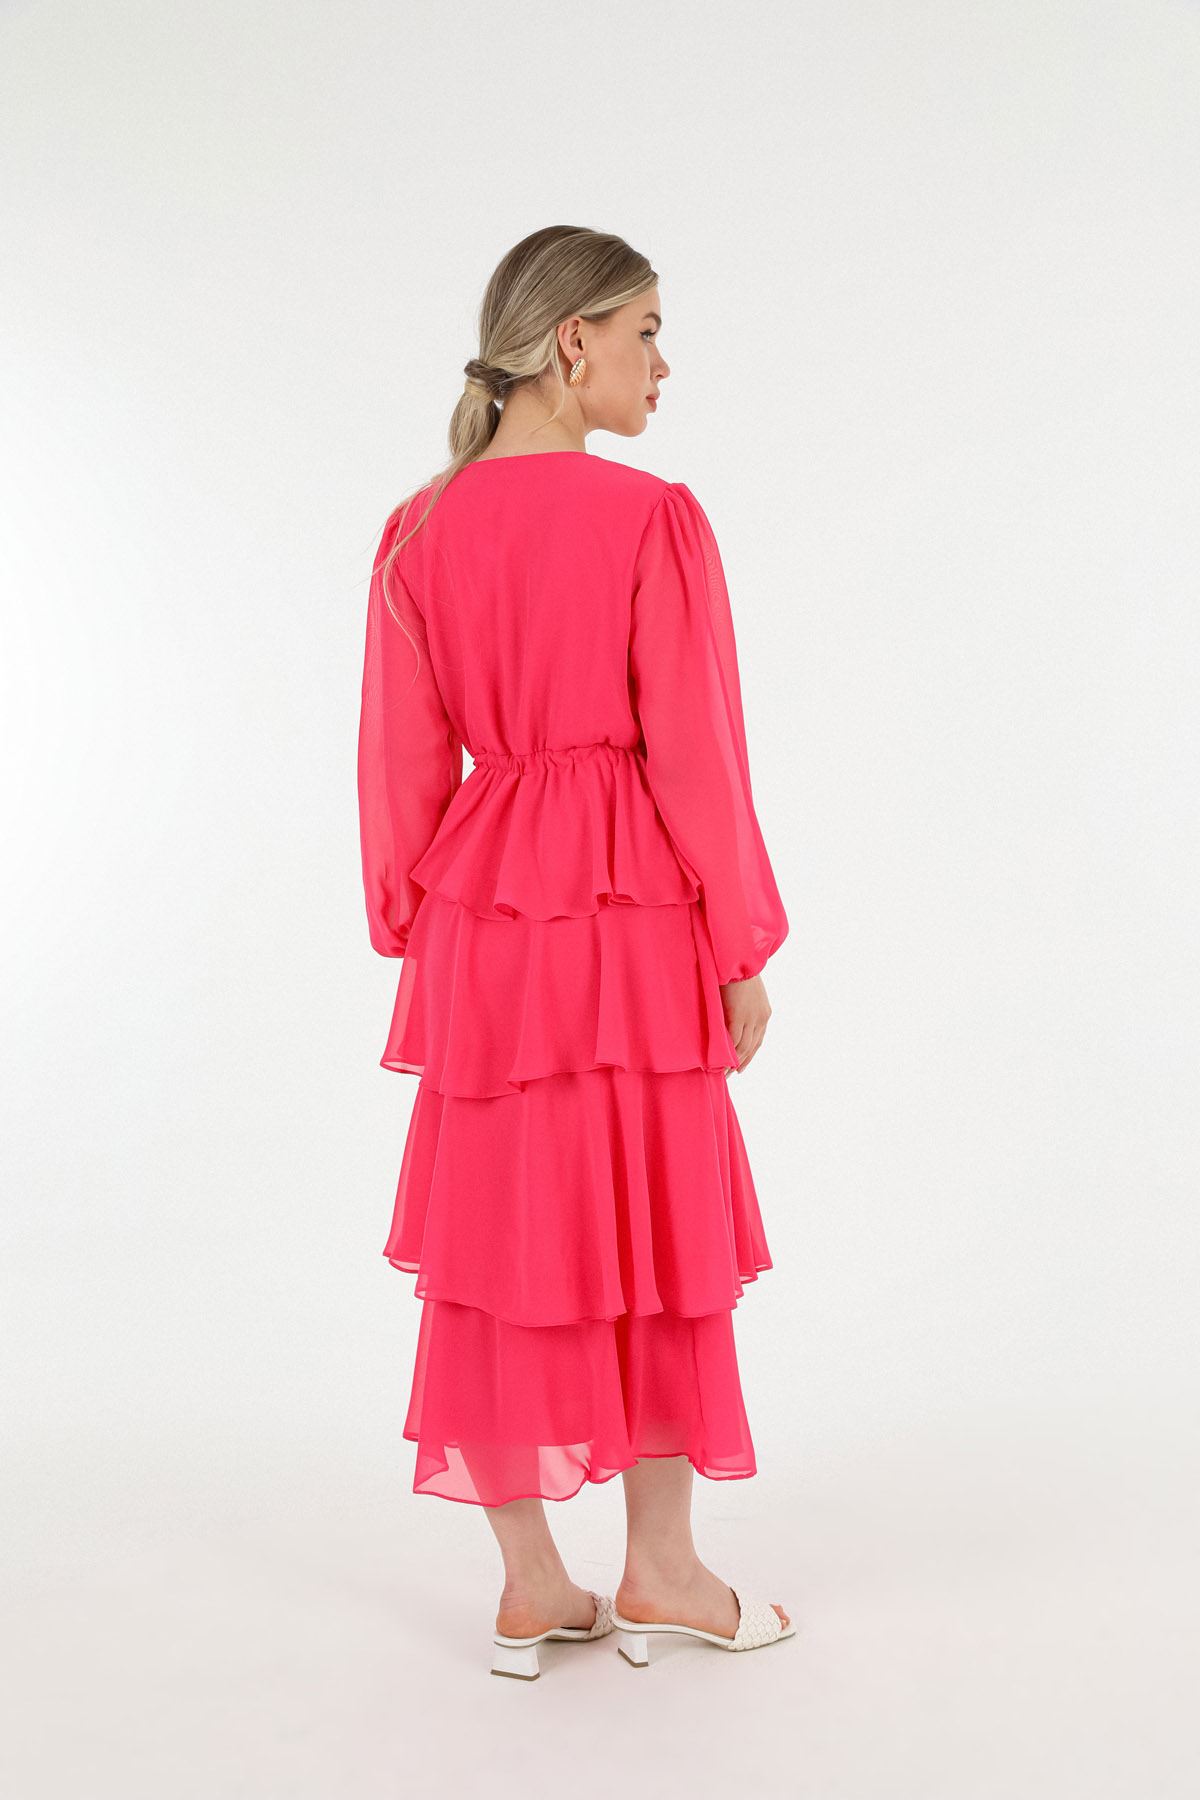 Chiffon Fabric Long Sleeve V Neck Women Dress-Fuchia